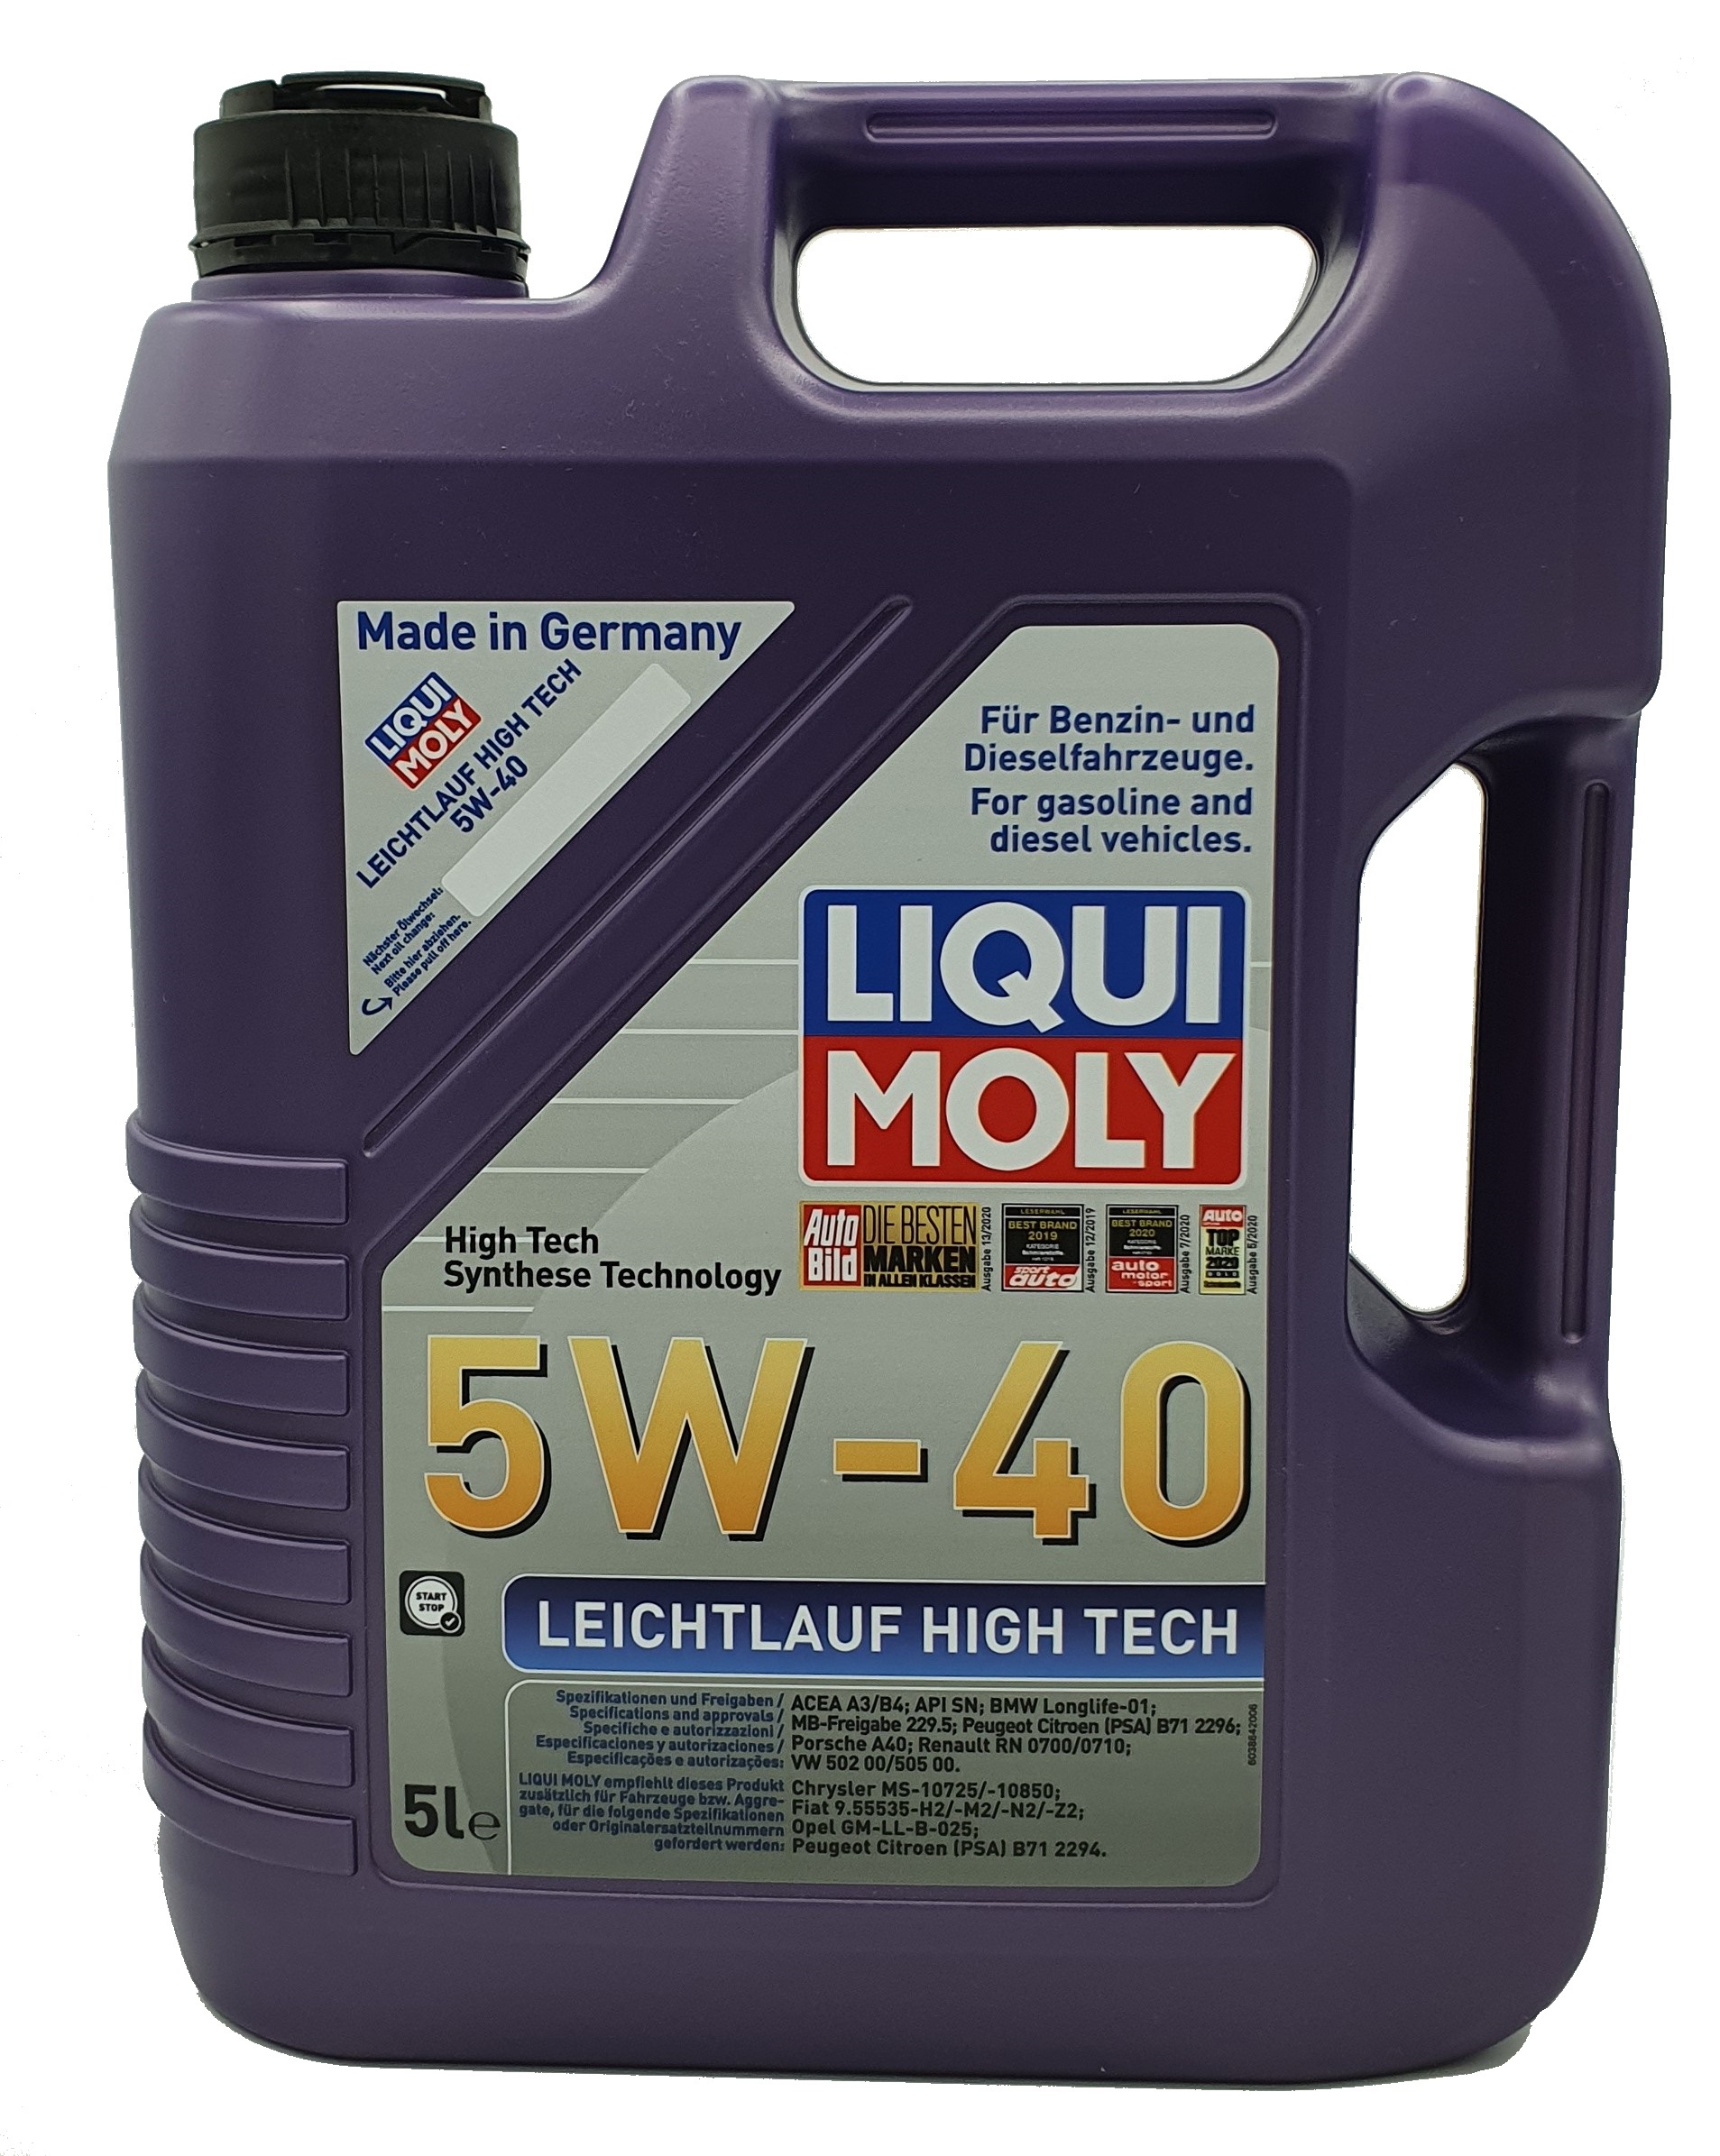 Liqui Moly Leichtlauf High Tech 5W-40 5 Liter